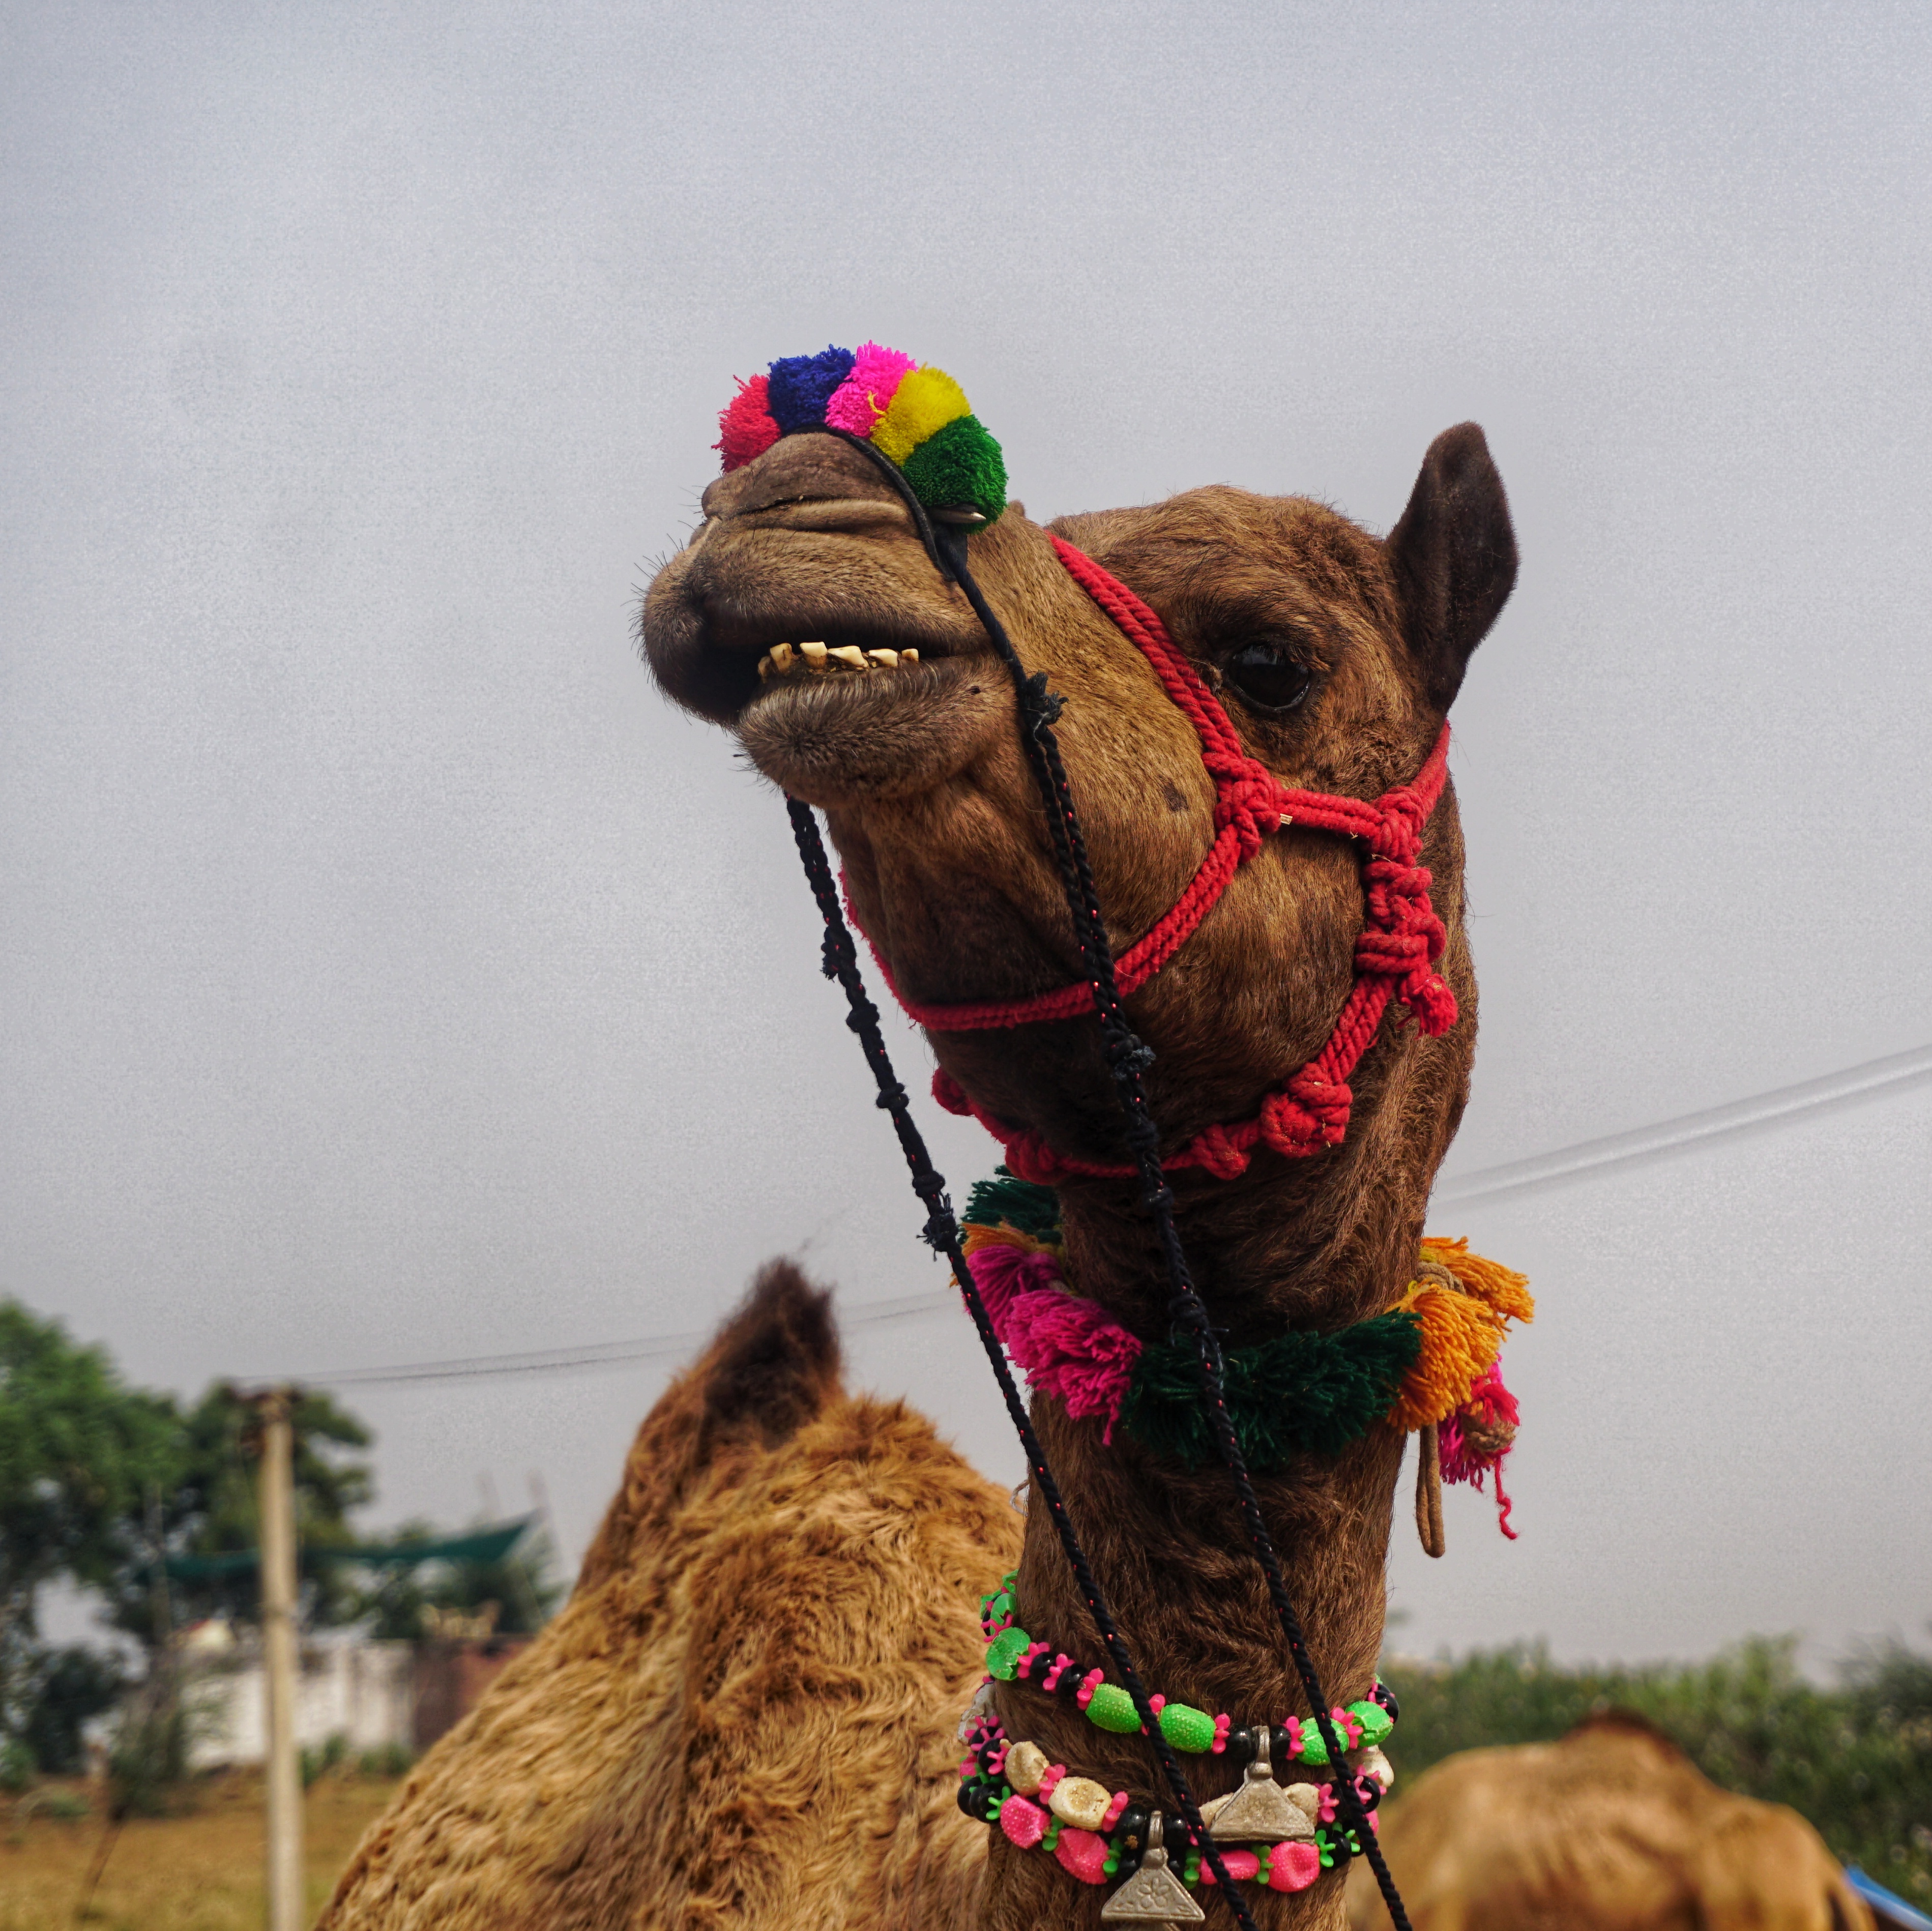 pushkar fair cattle fair camel